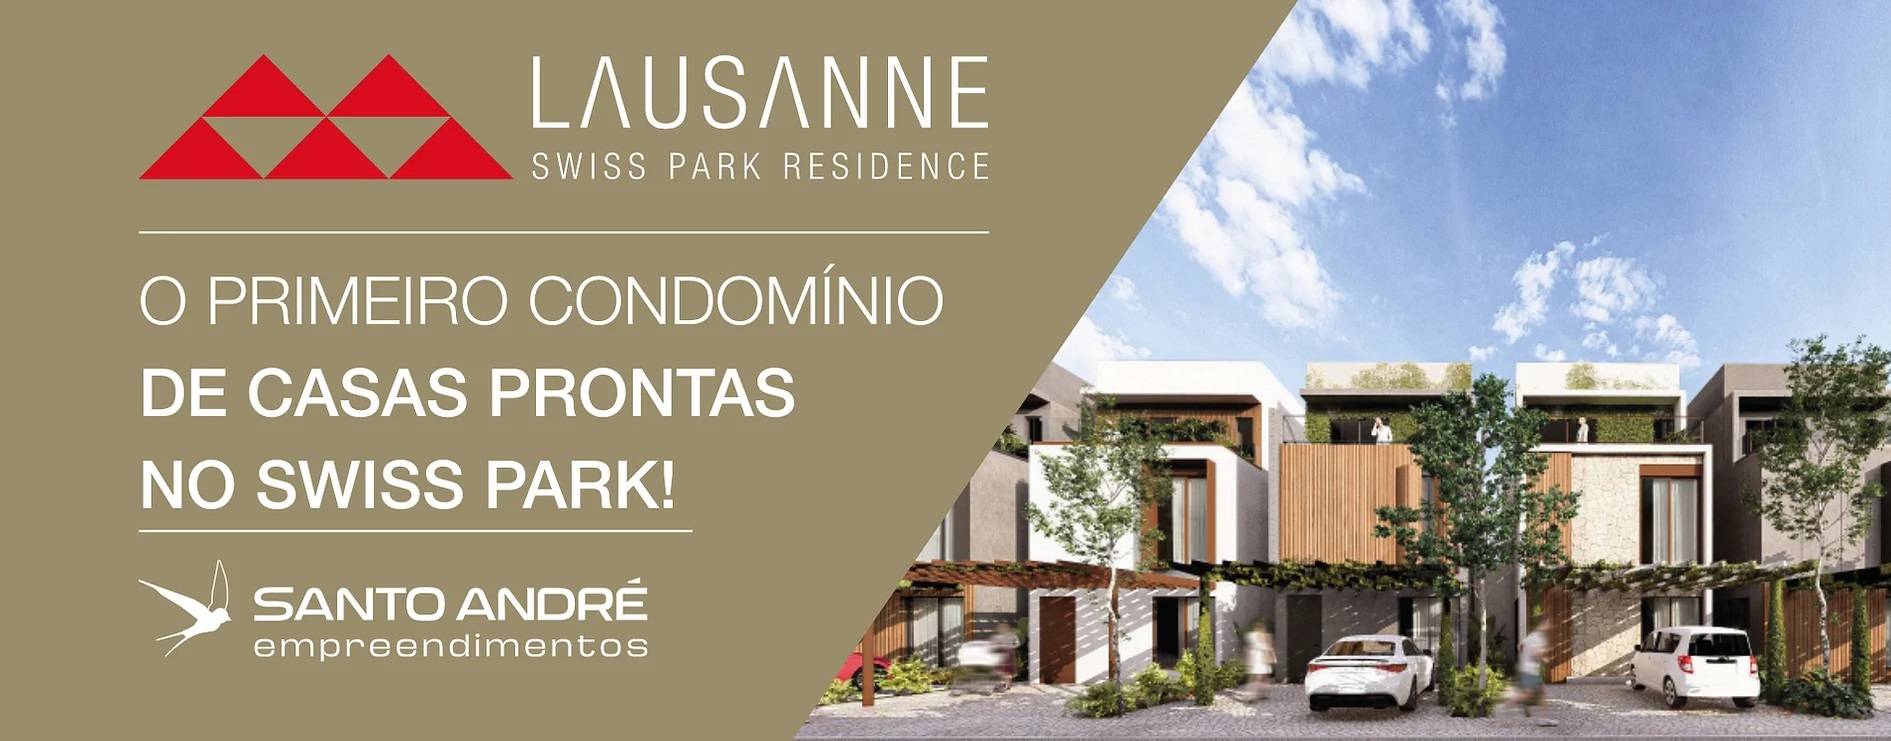 >Lausanne Swiss Park Residence